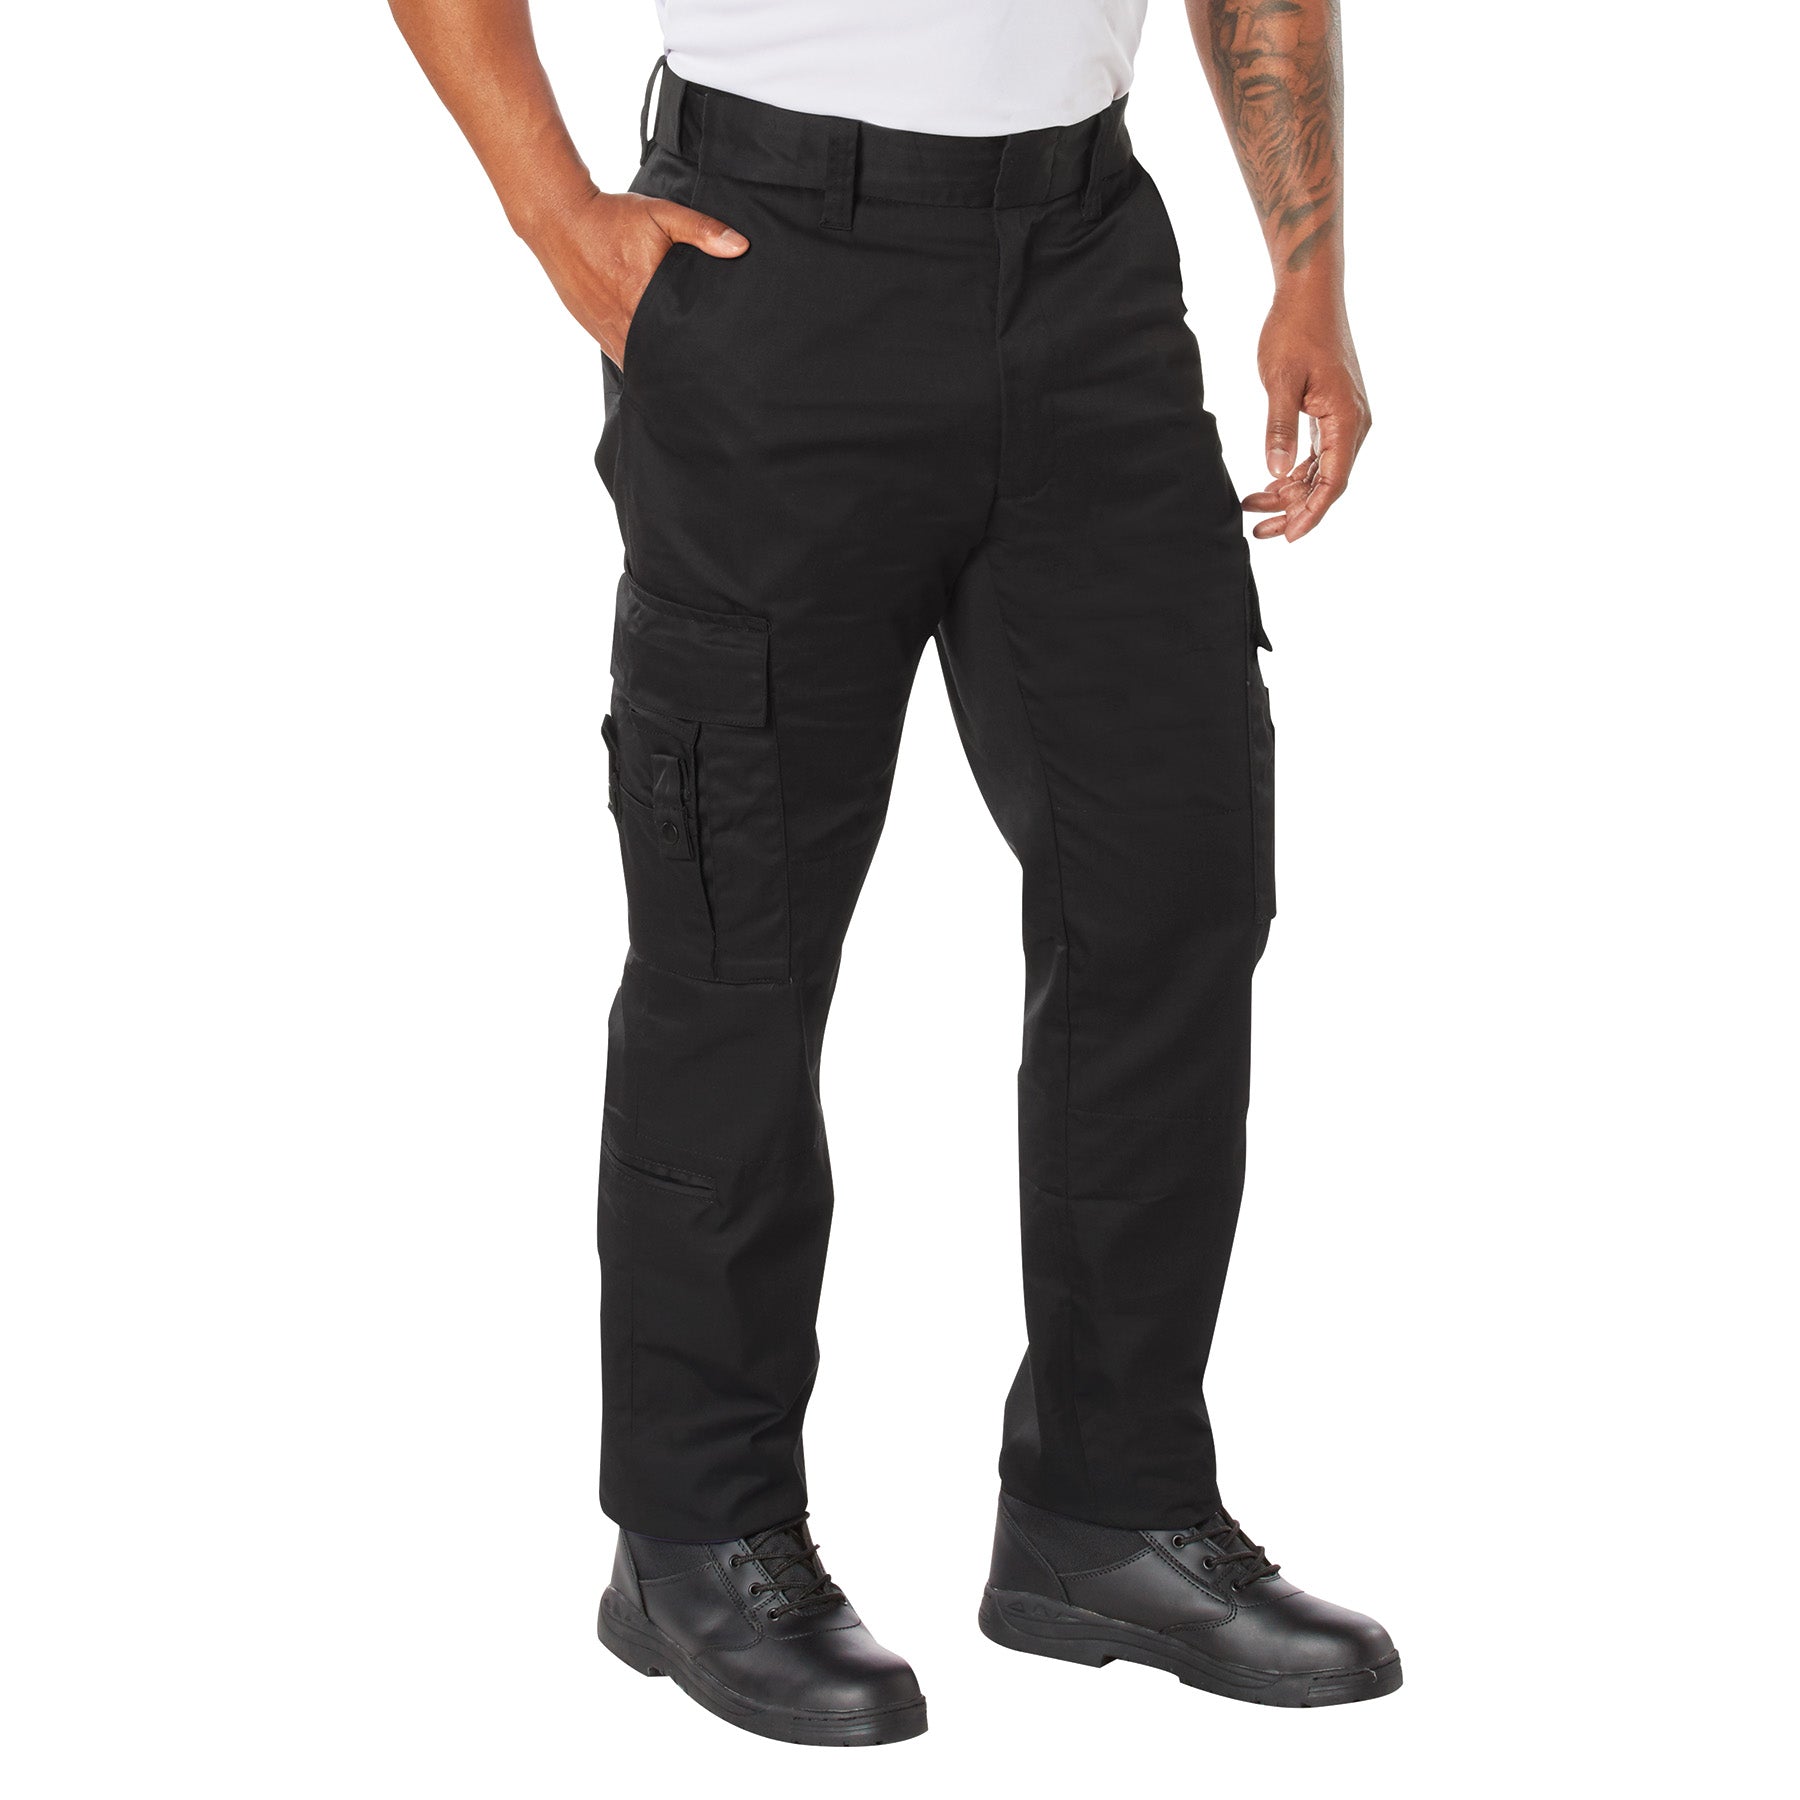 [Public Safety] Poly/Cotton Deluxe EMT Tactical Pants